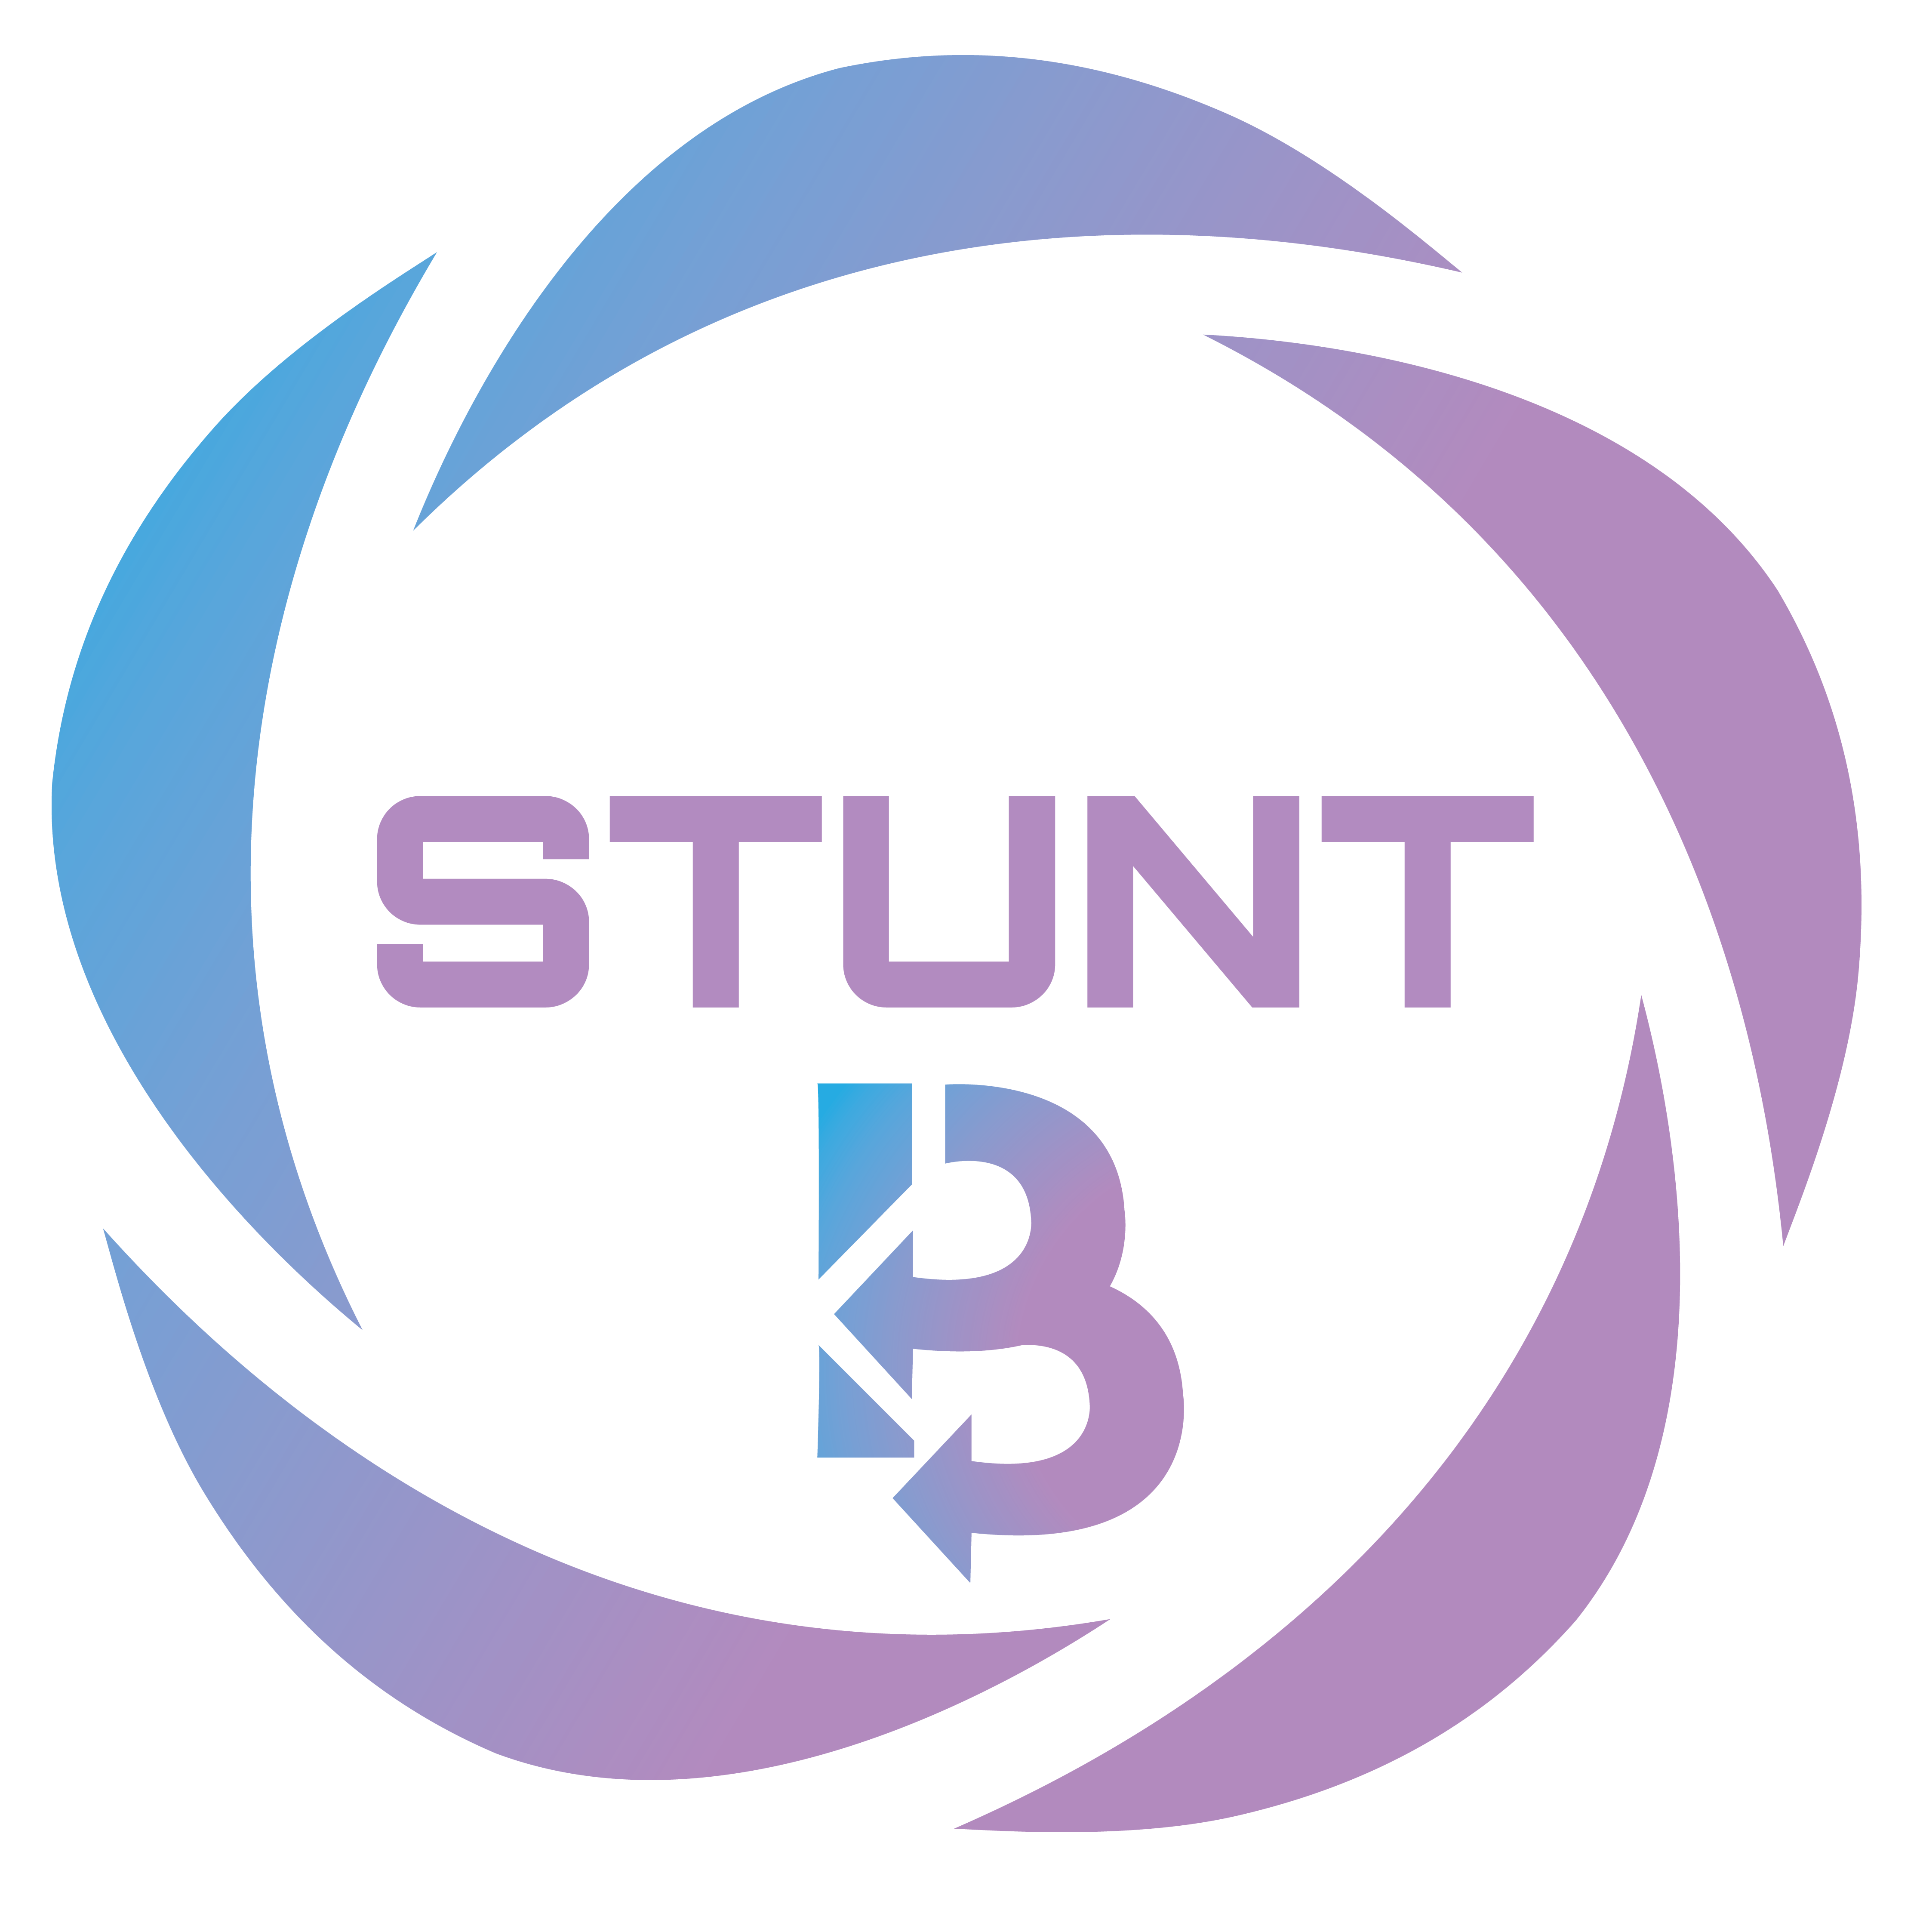 Stunt's logo